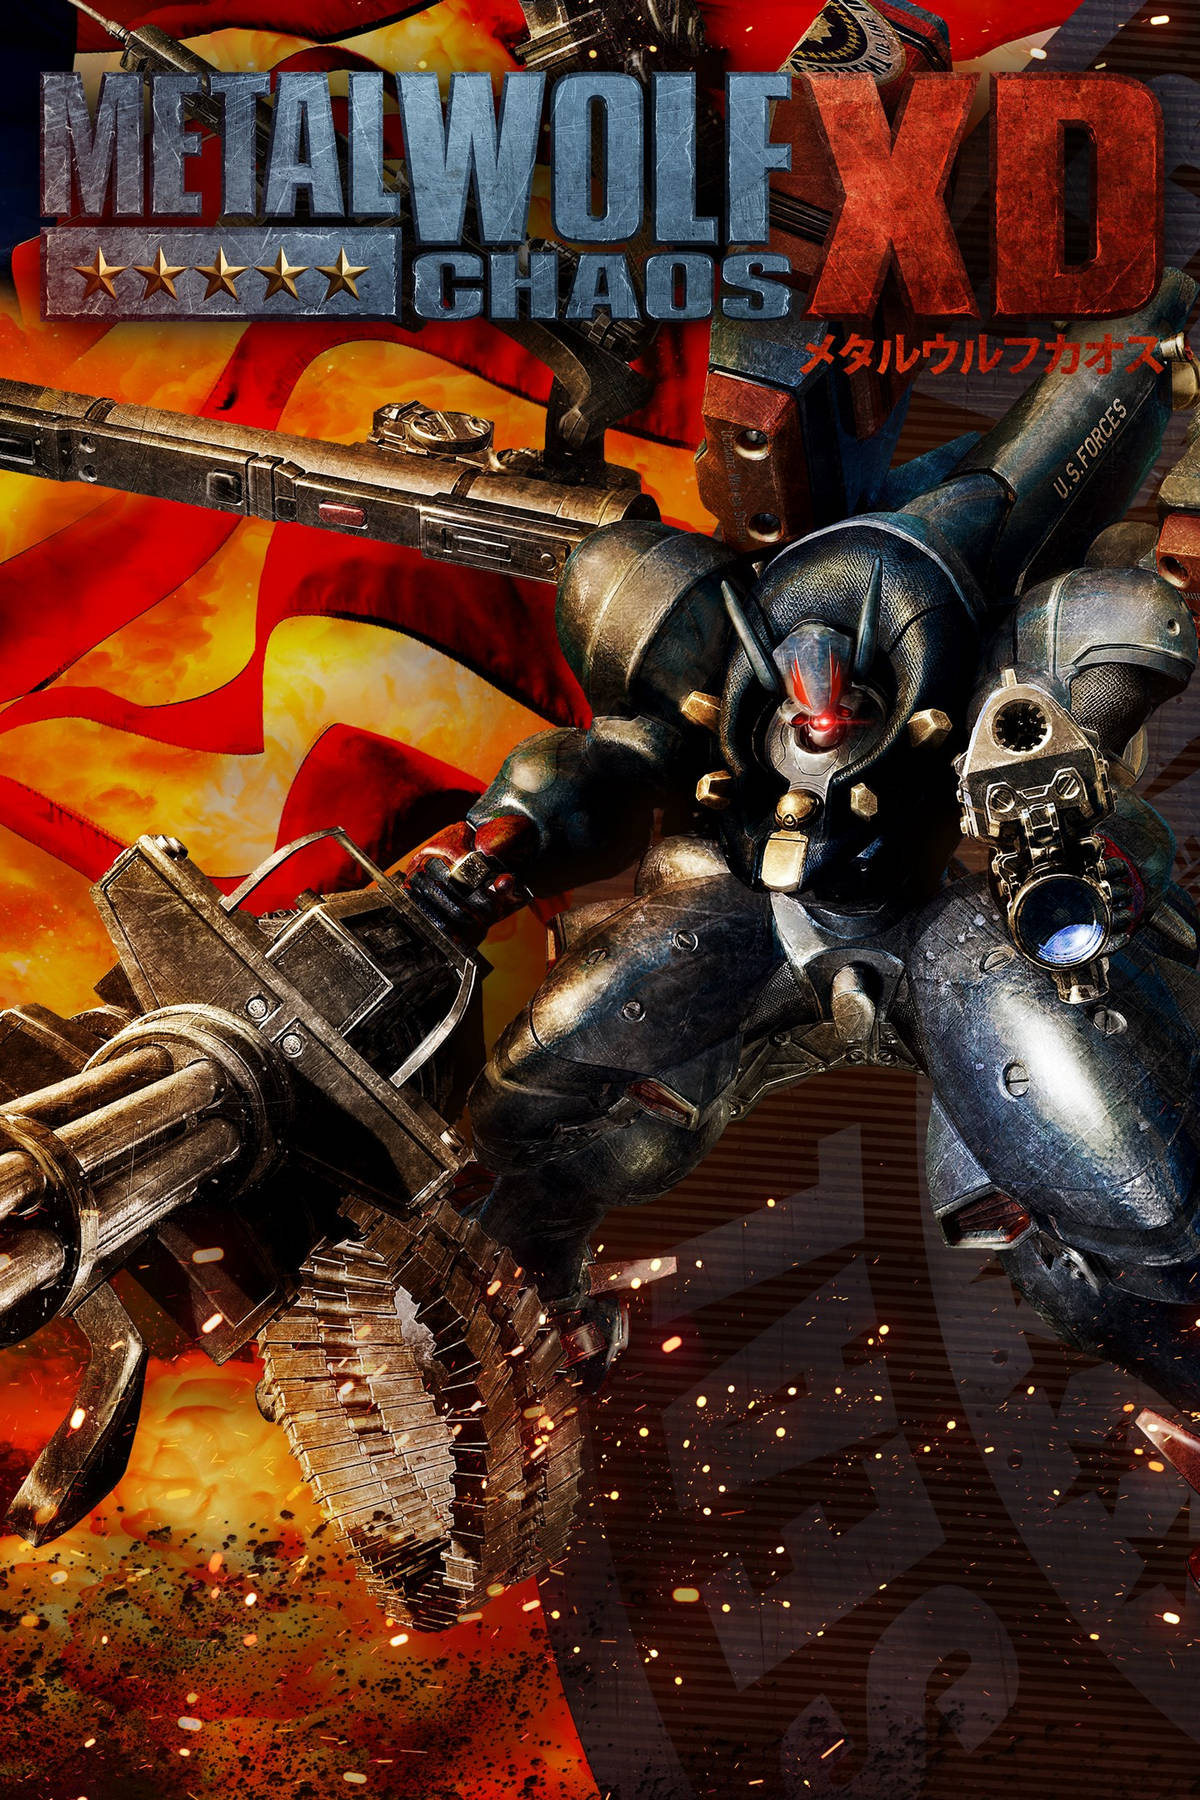 Capa do jogo Metal Wolf Chaos XD